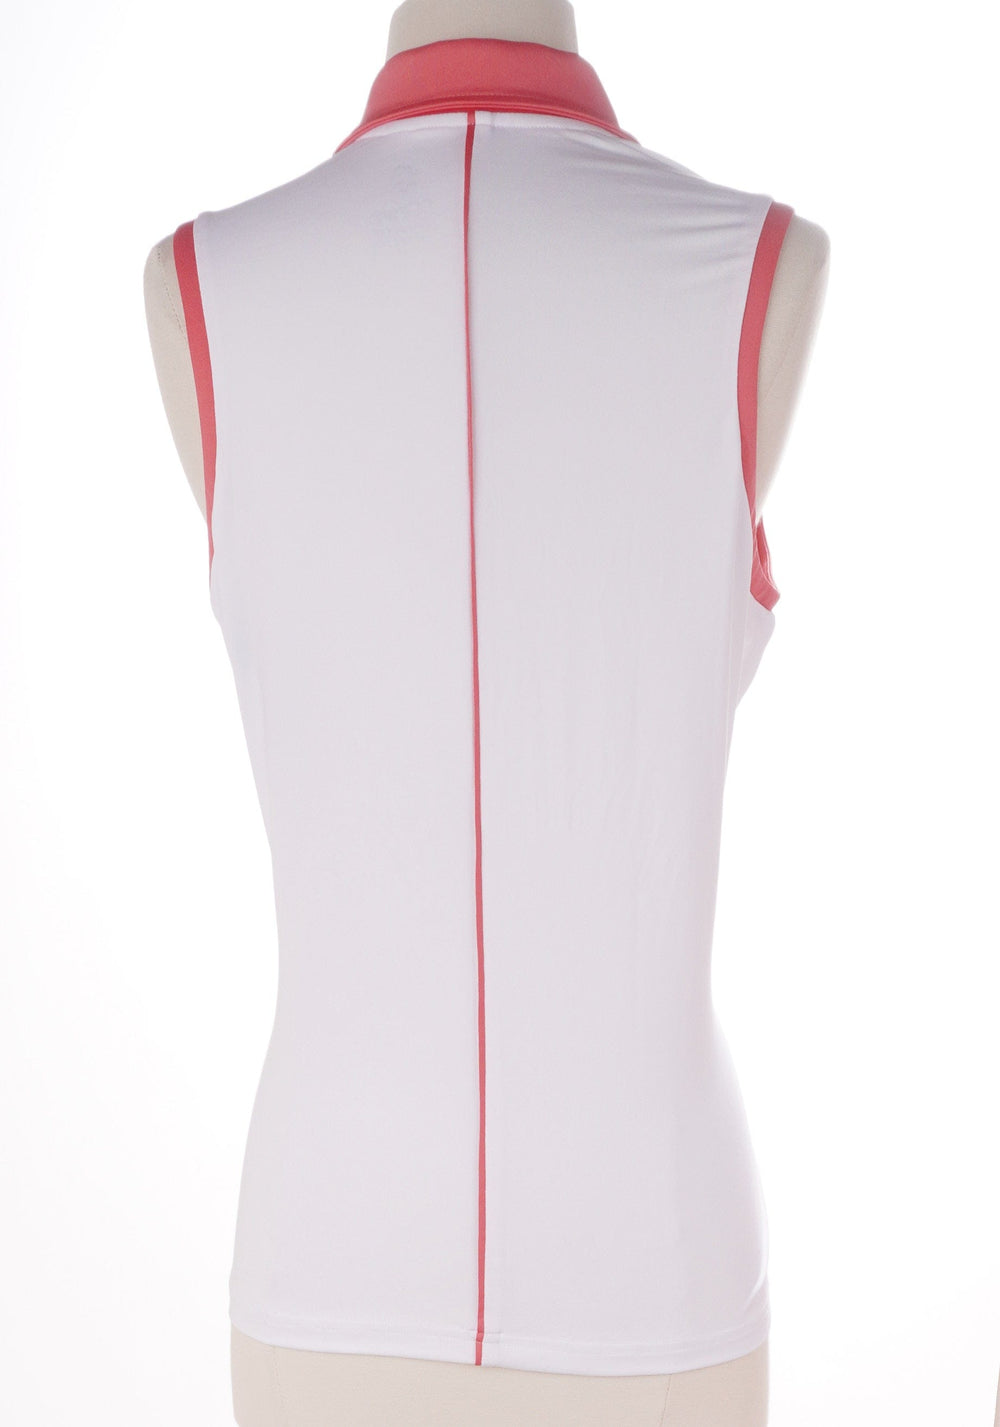 Skorzie White/Pink / Medium GGBlue Sleeveless Top Exclusive Product - White/Pink - Size Medium